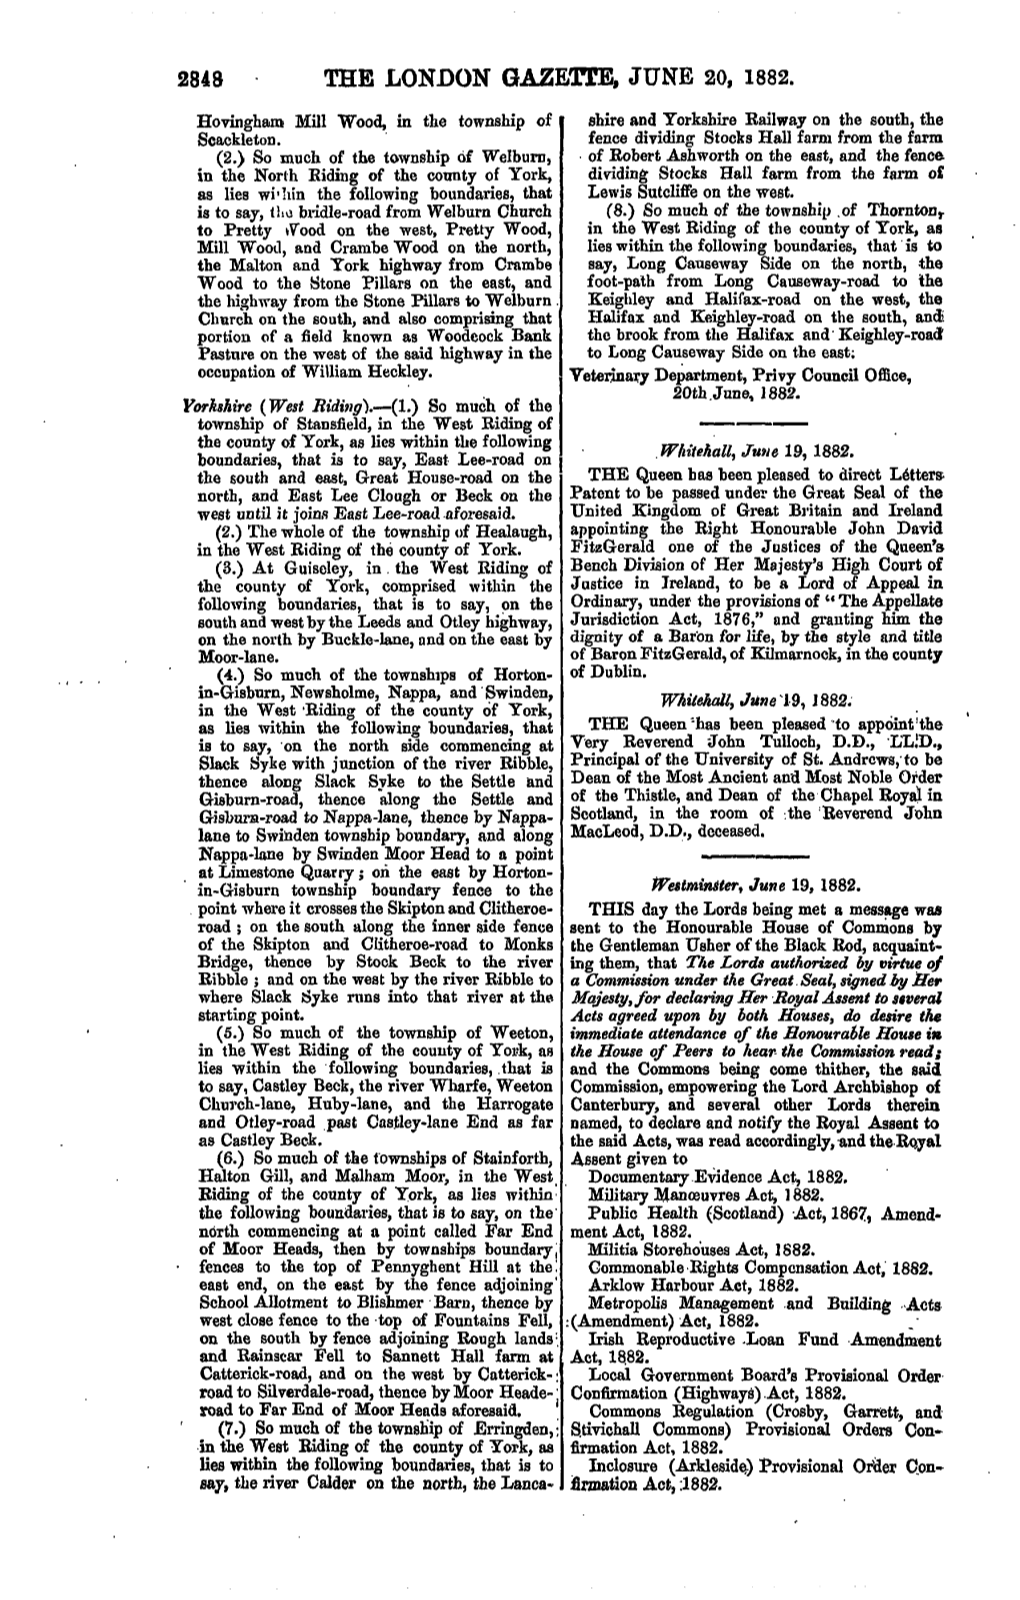 The London Gazette, June 20, 1882